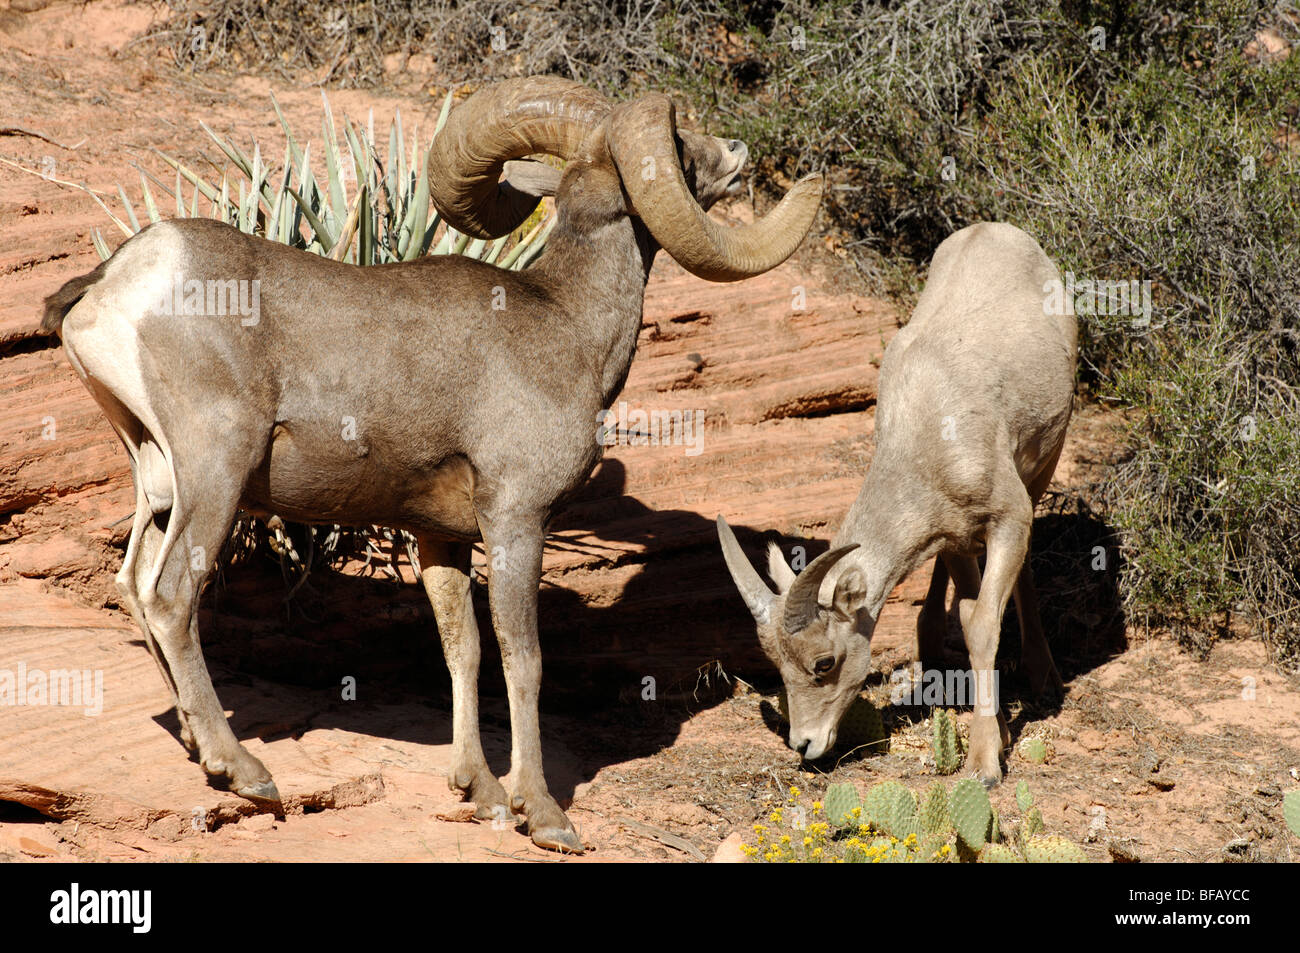 Stock photo of a large desert bighorn ram displaying breeding behavior by a ewe, Zion National Park, Utah. Stock Photo